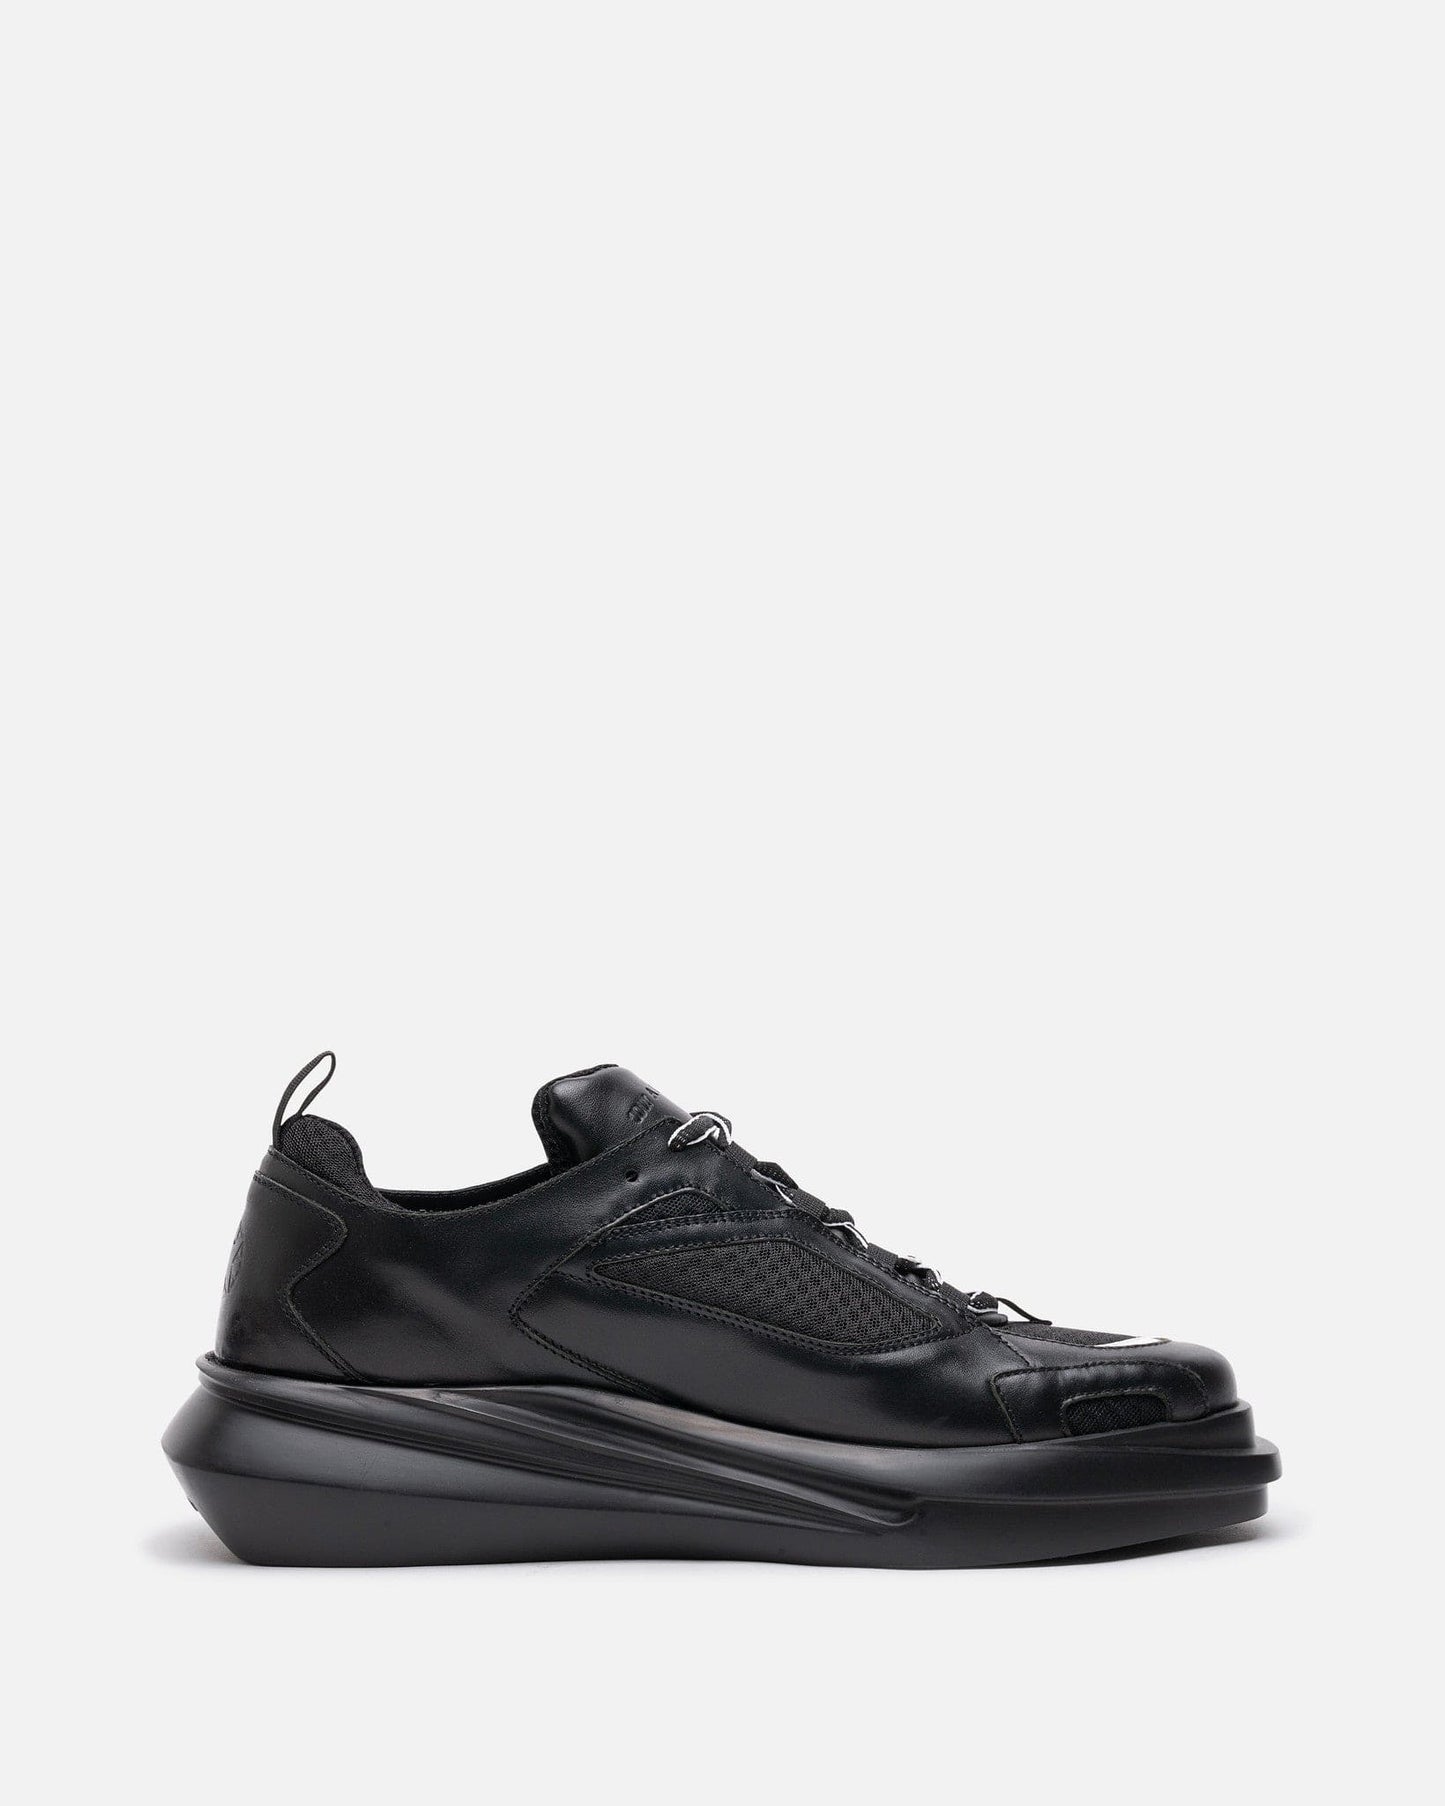 1017 ALYX 9SM Men's Sneakers Mixed Mono Hiking Sneaker in Black/White